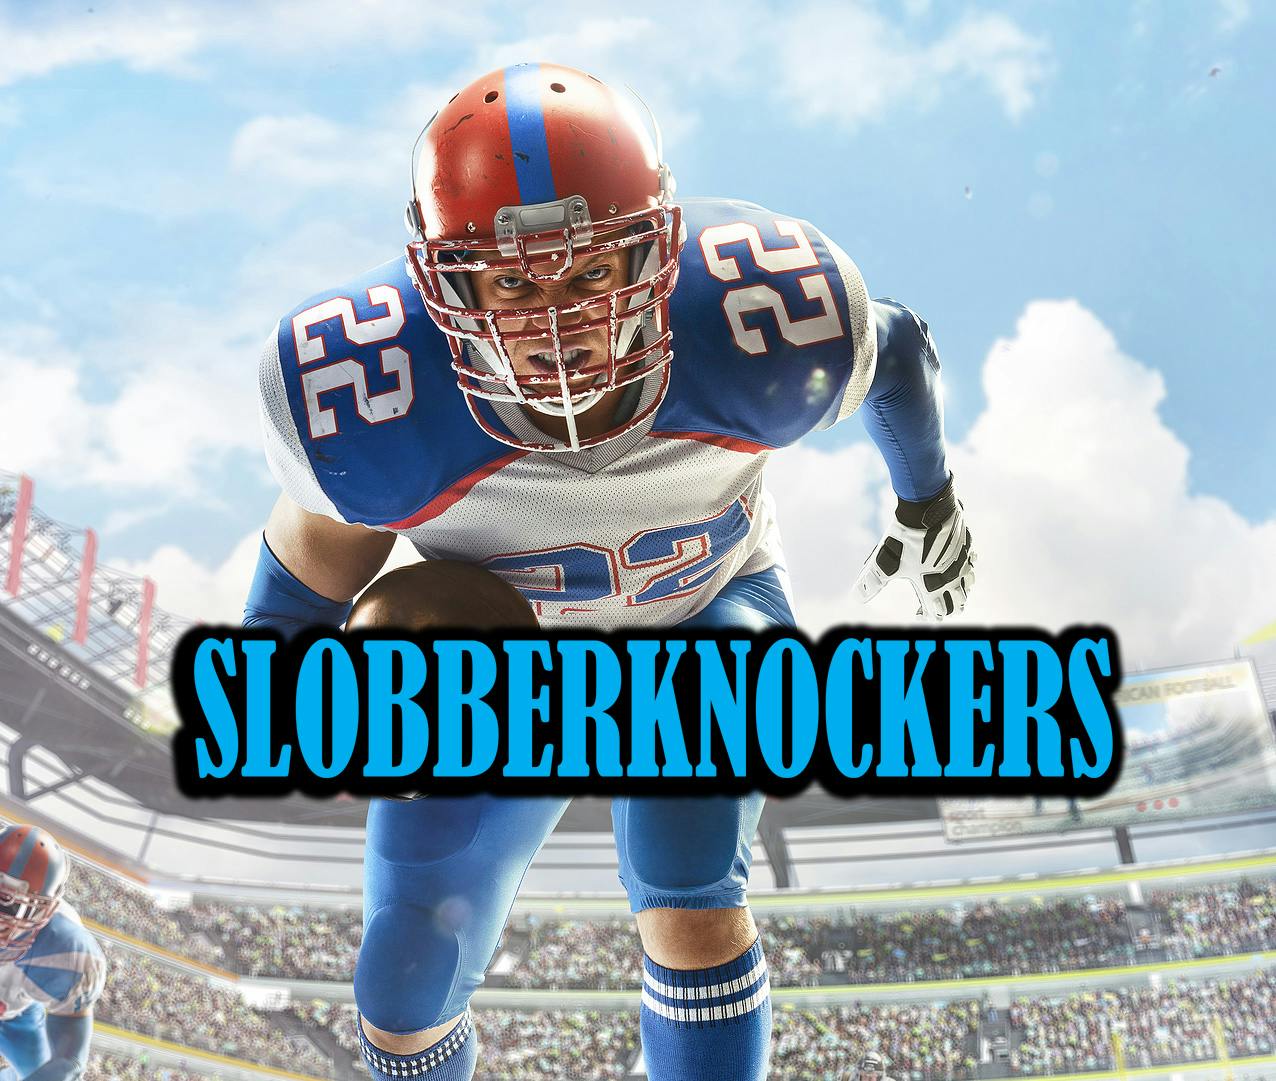 SLOBBERKNOCKERS NFL SUPER BOWL - Cobras & Fire: Comedy / Rock Talk Show, Lyssna här